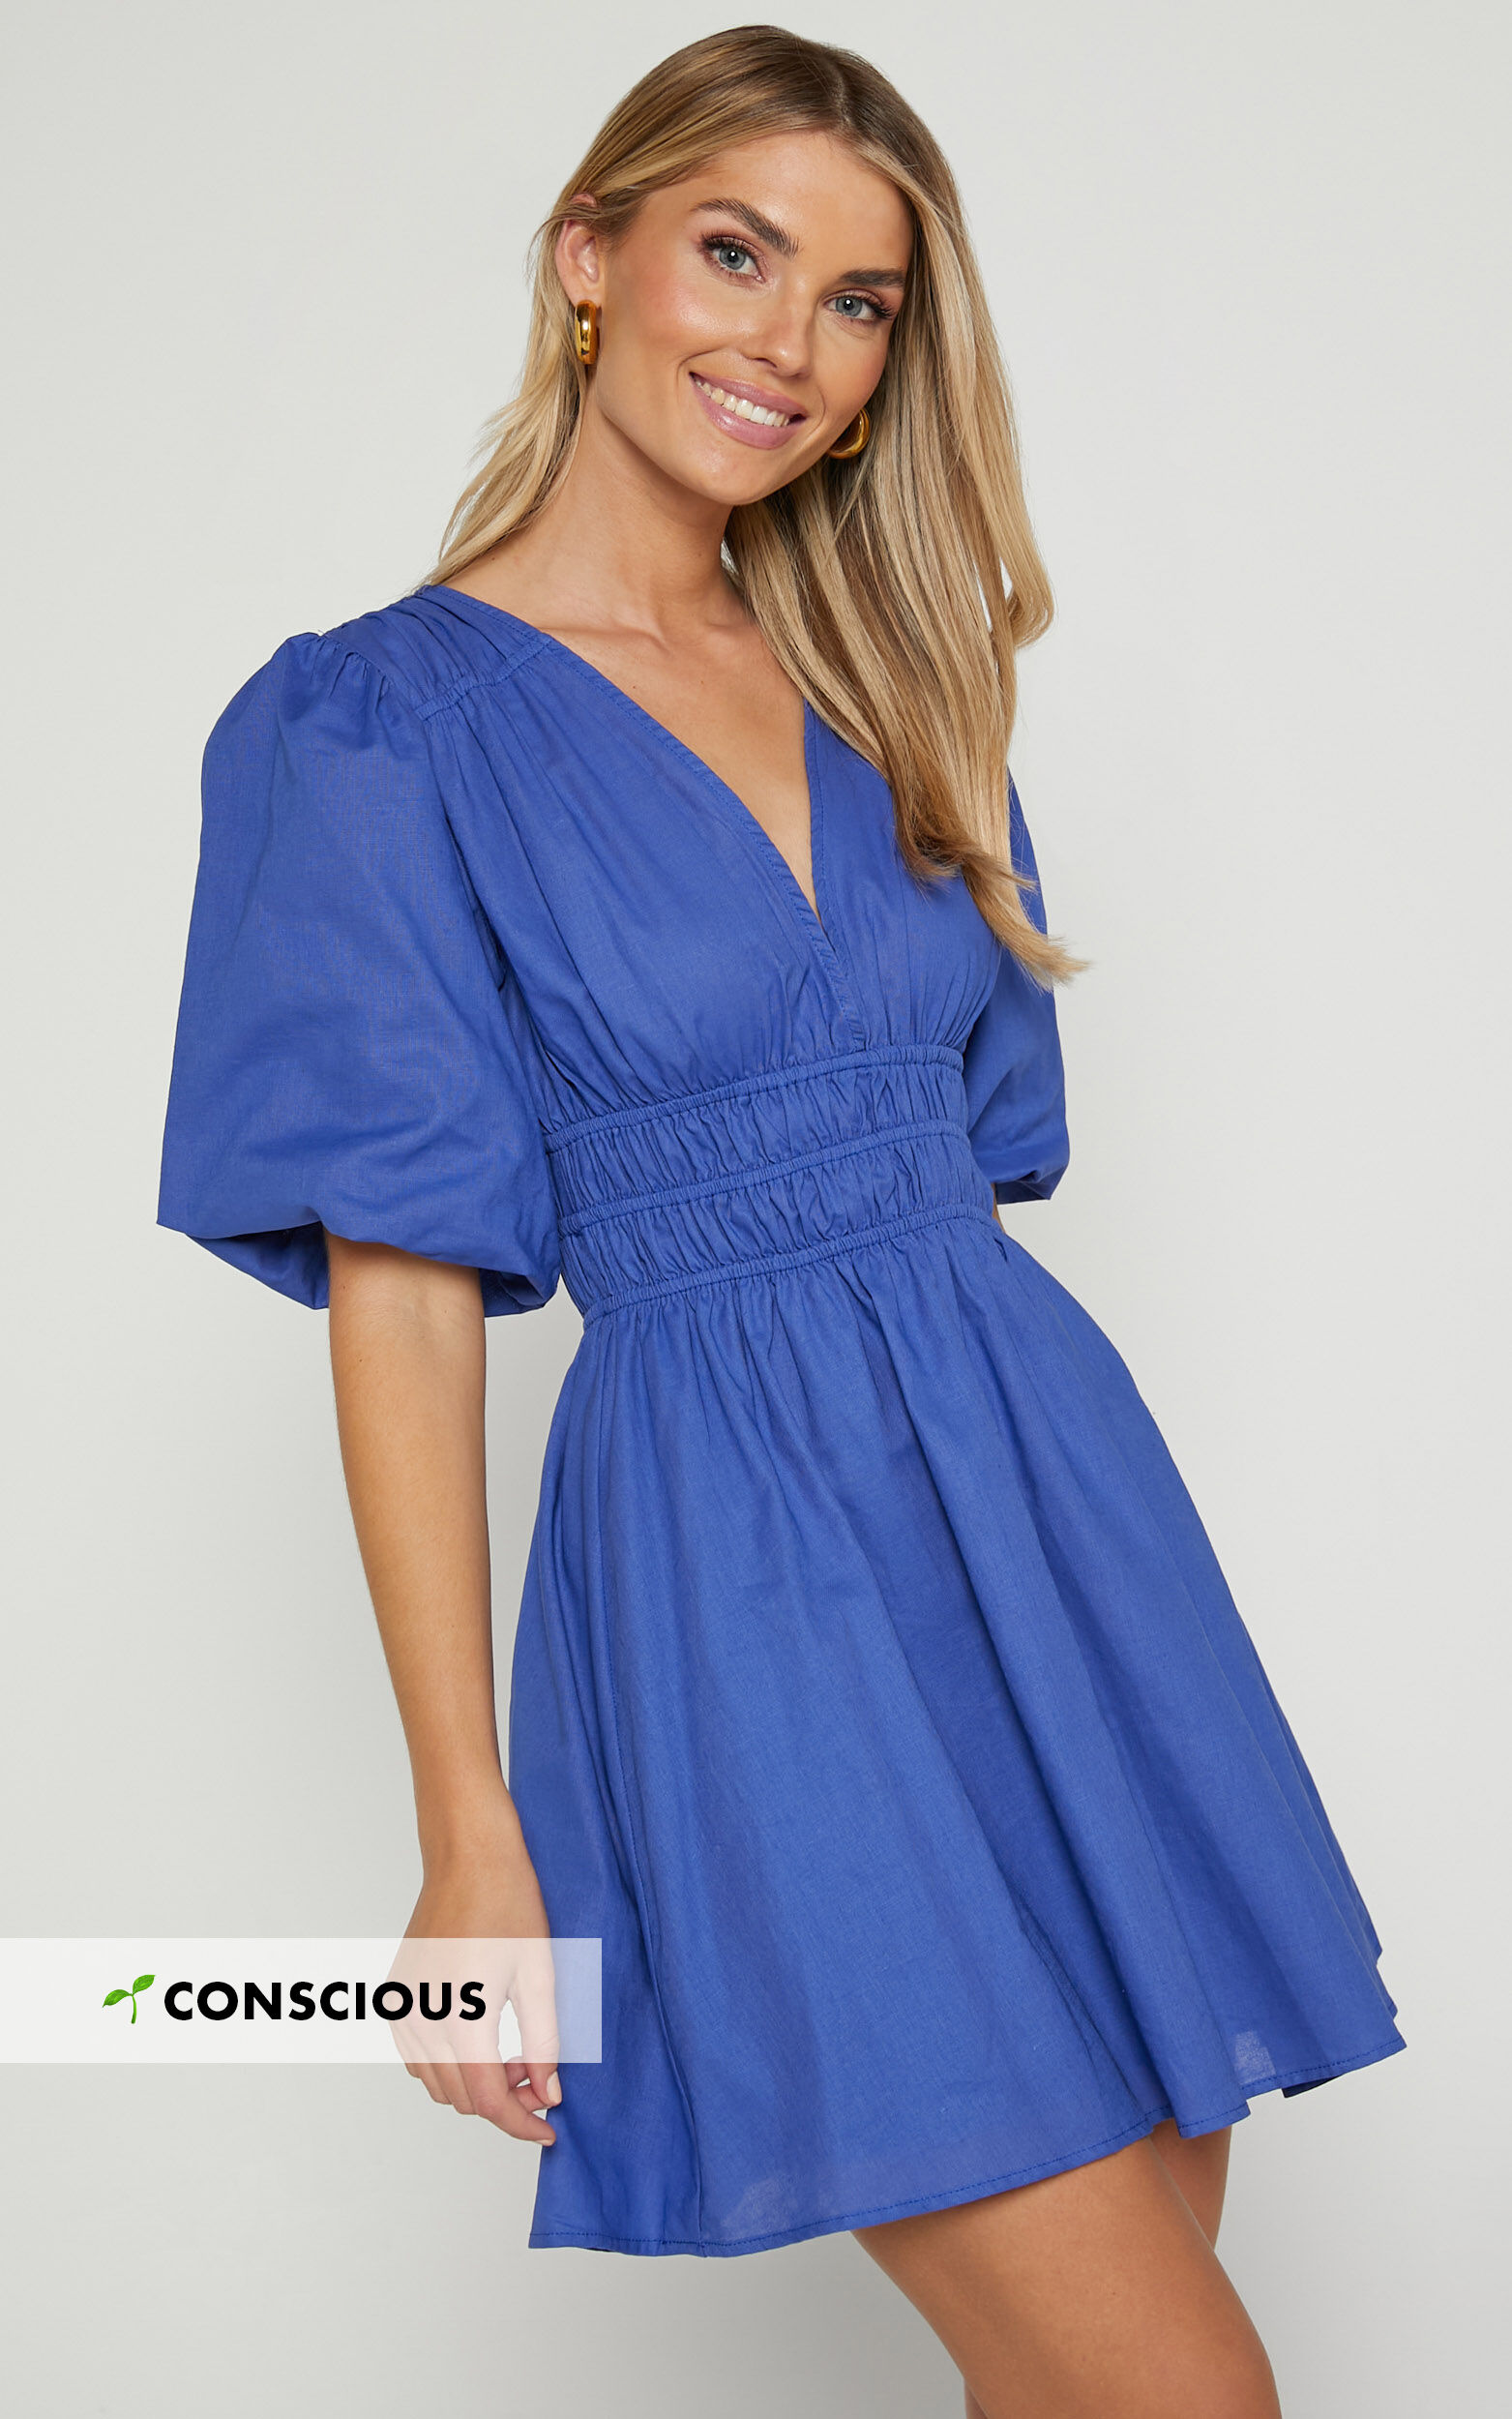 cornflower blue dress